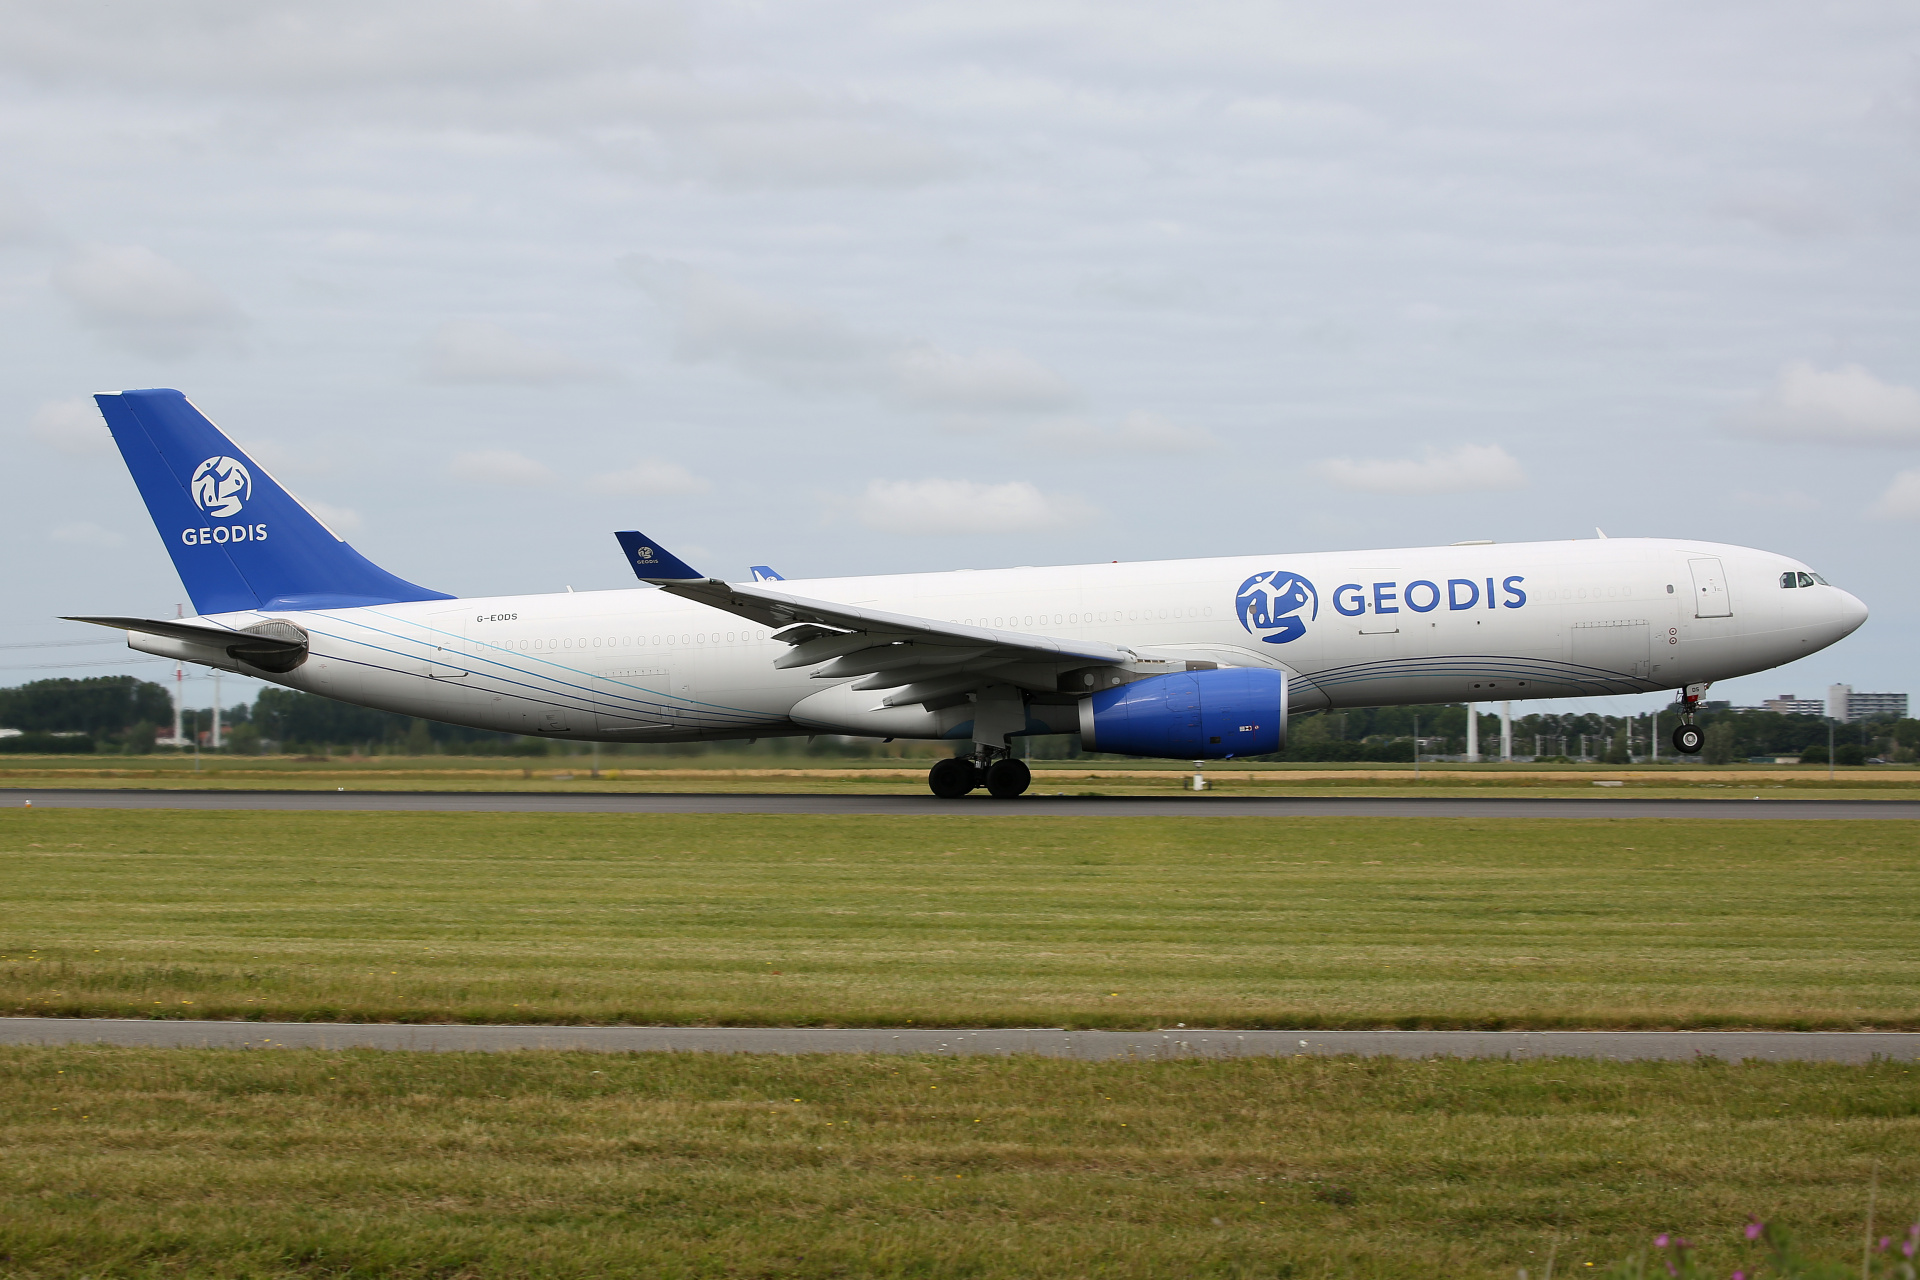 G-EODS, Geodis Air Network (Titan Airways) (Aircraft » Schiphol Spotting » Airbus A330-300P2F)